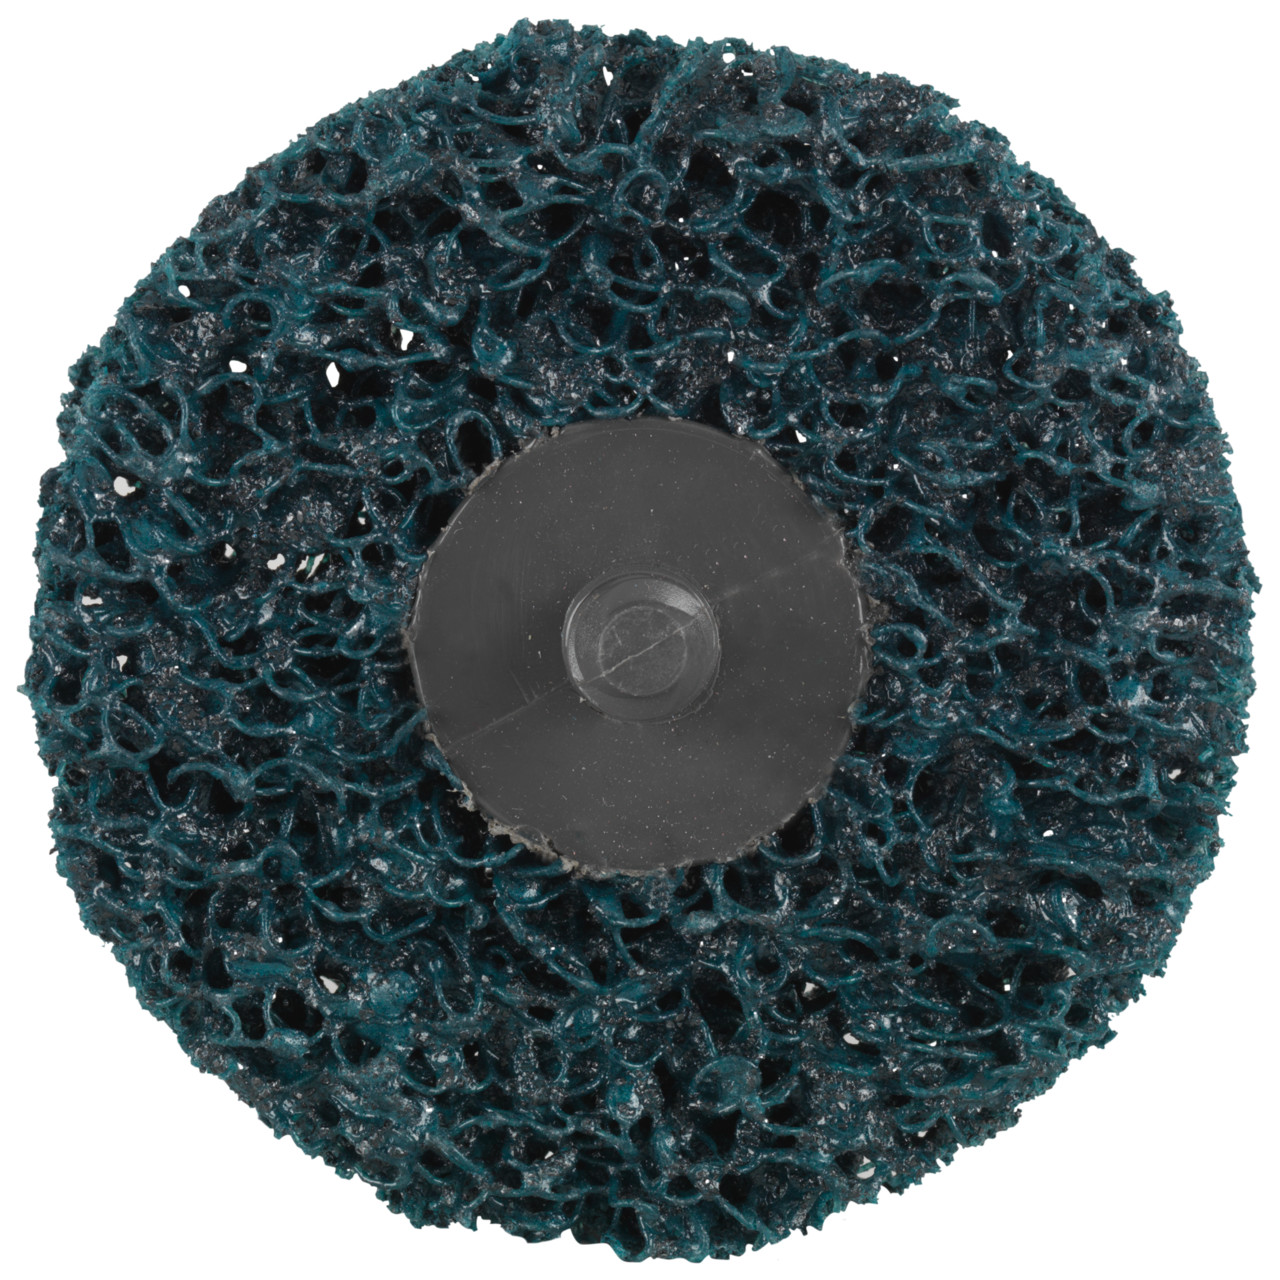 Disco per la pulizia grossolana Tyrolit dimensione 50xR Per acciaio, acciaio inox e PVC, C GROB, forma: QDISC, Art. 112602